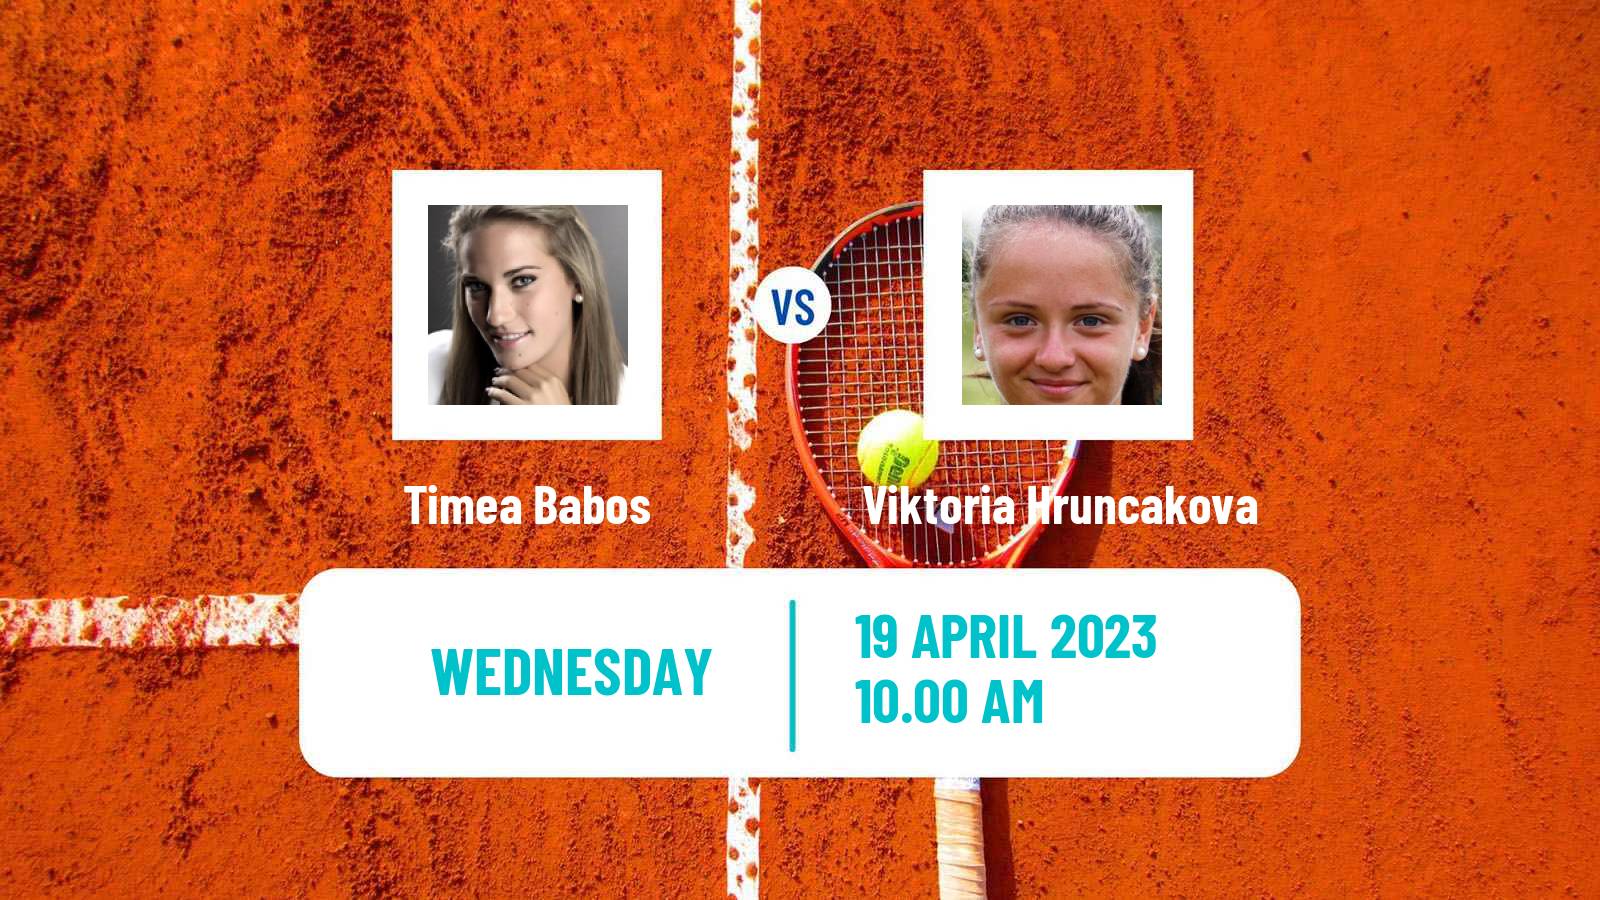 Tennis ITF Tournaments Timea Babos - Viktoria Hruncakova